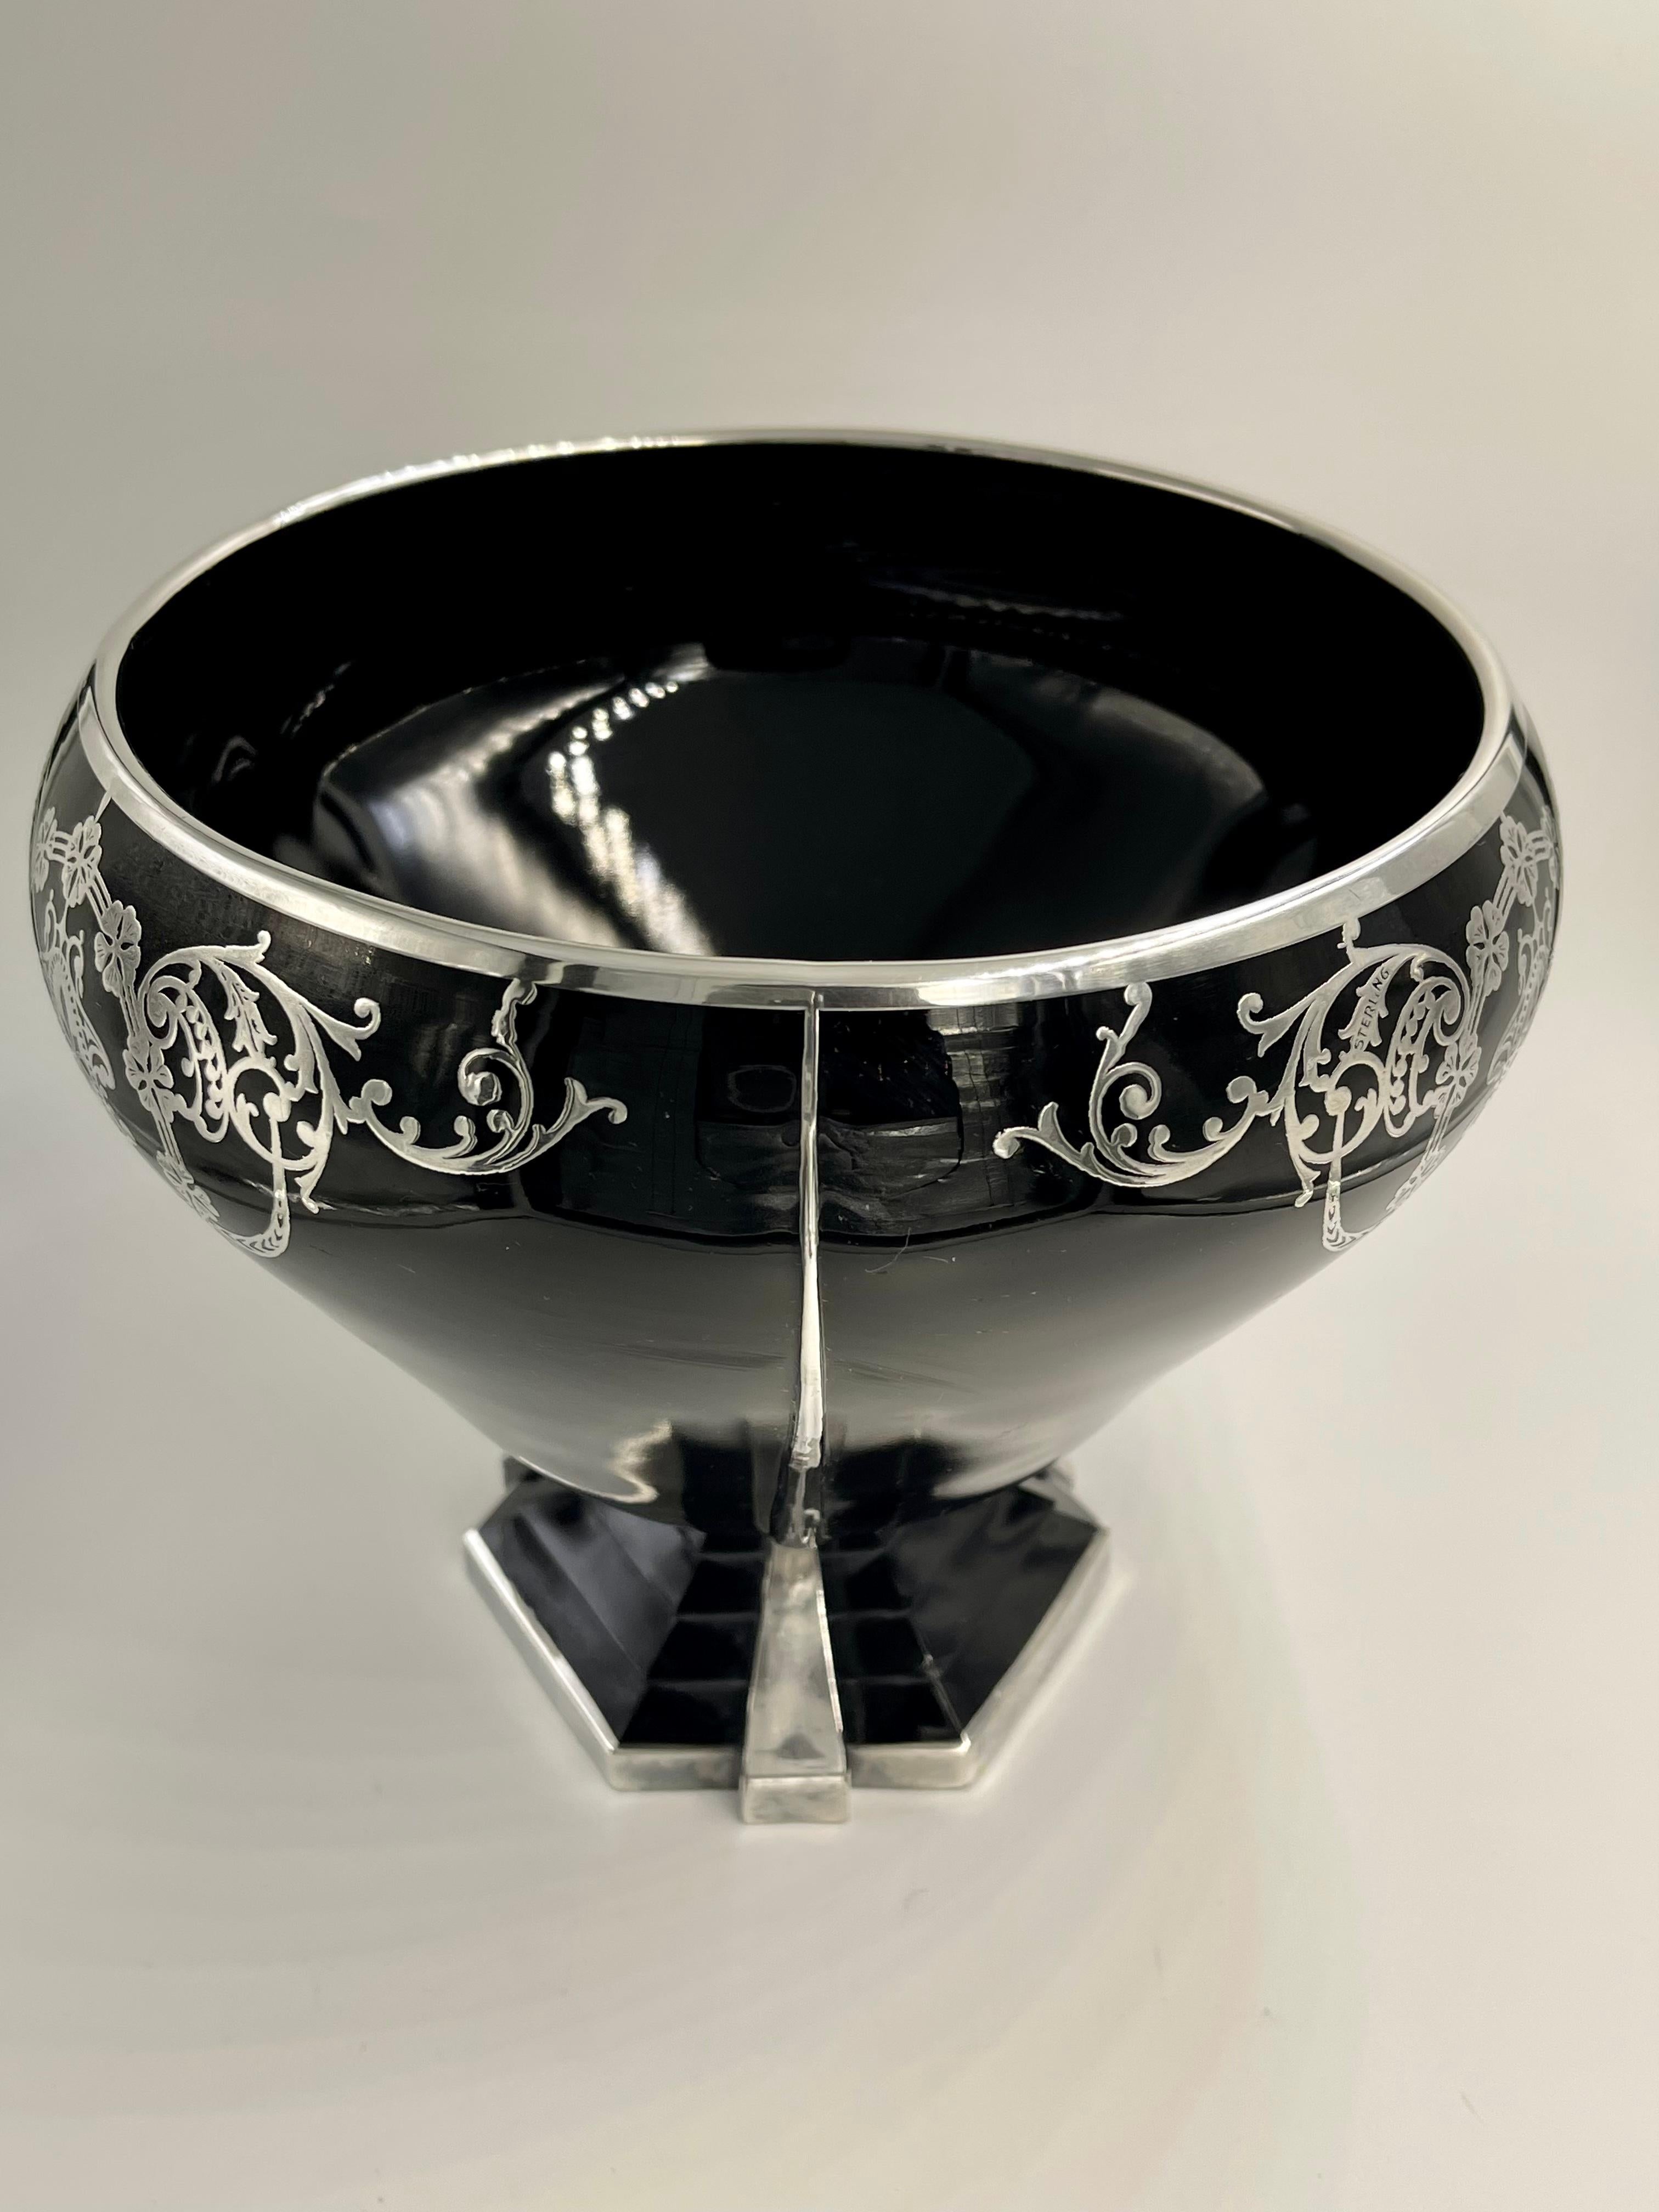 20th Century Art Deco Floral Sterling Silver Overlay Black Glass Bowl Vase Step Foot Design